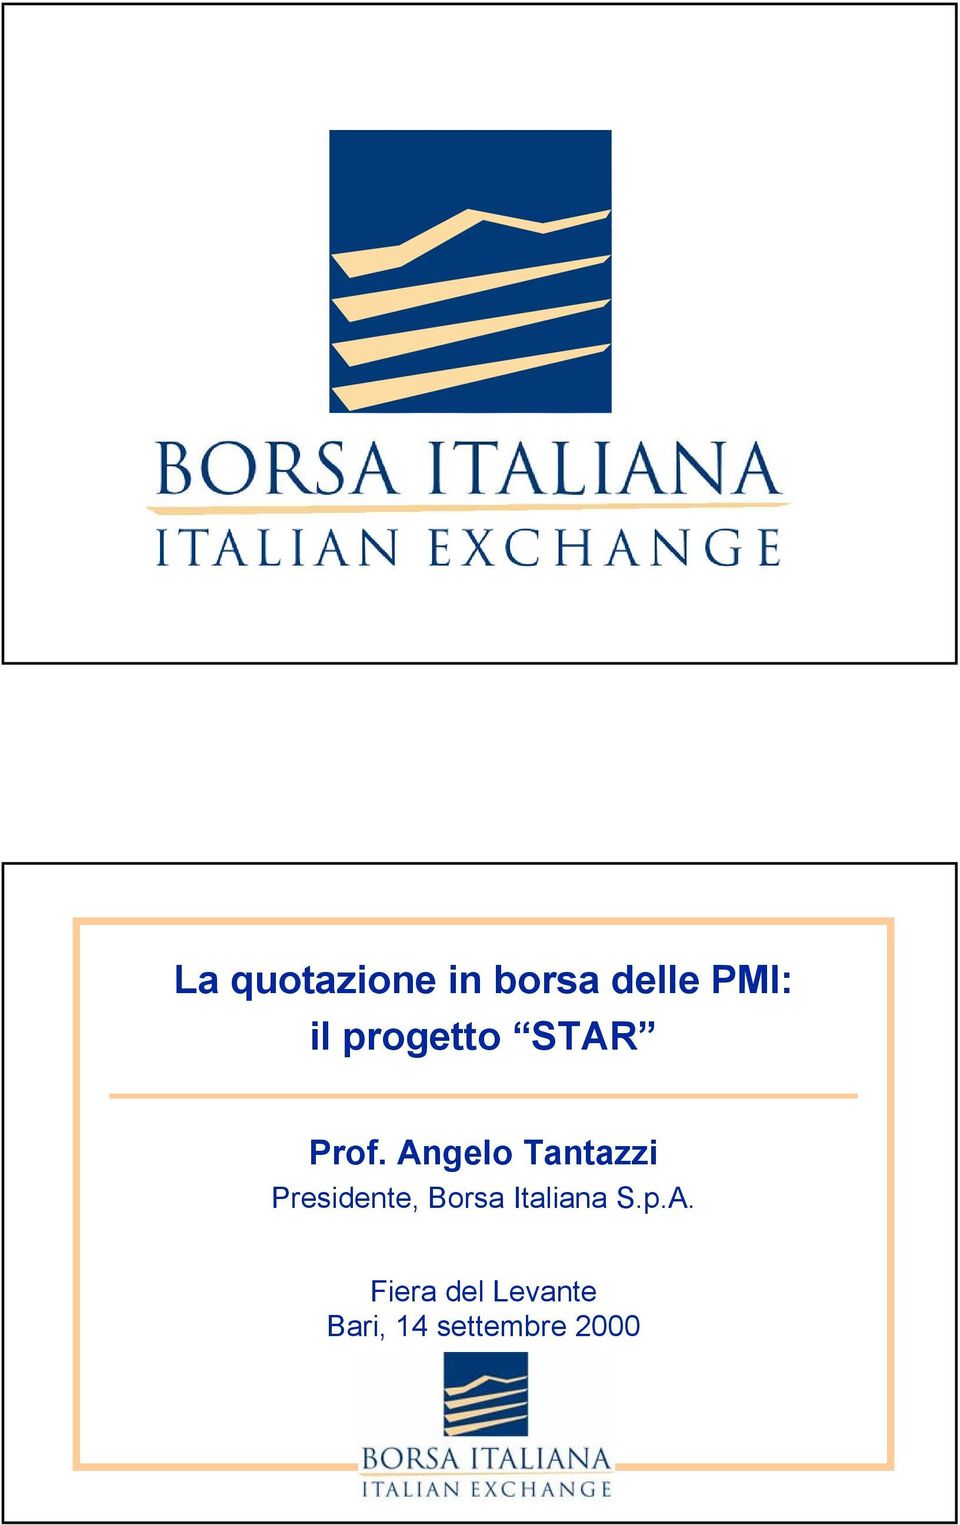 Angelo Tantazzi Presidente, Borsa